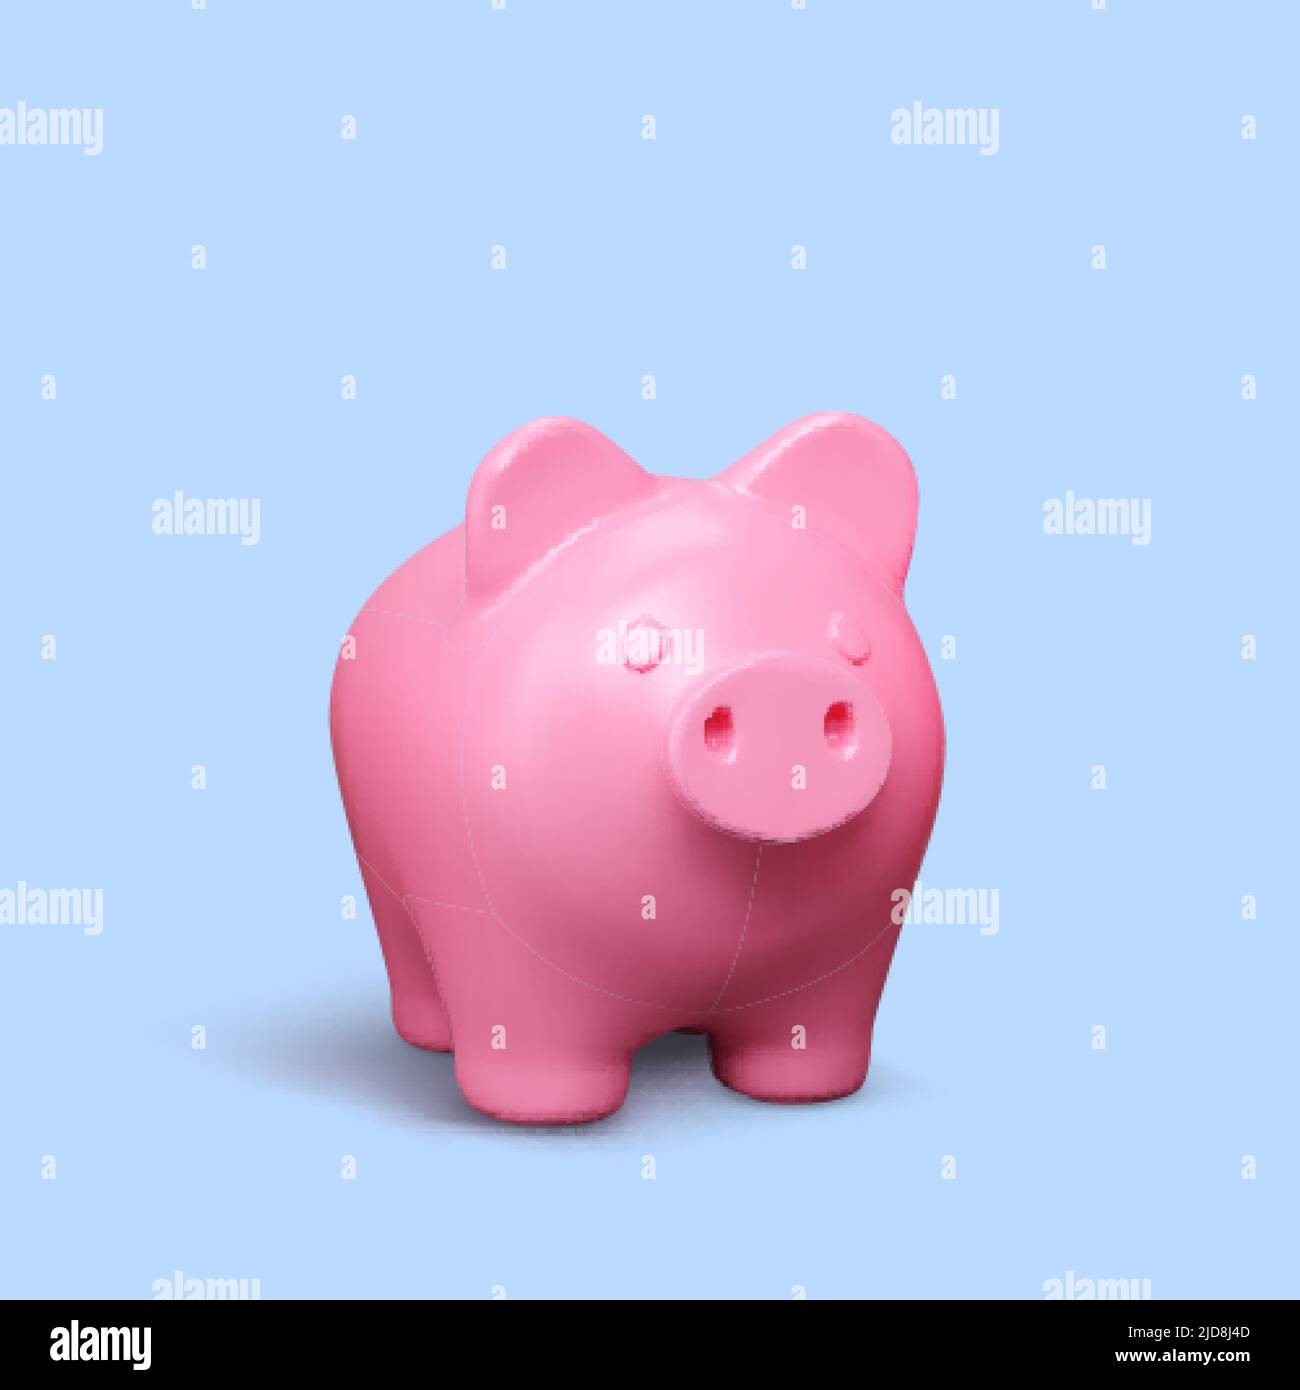 Banco piggy. Cerdo rosa aislado sobre fondo azul. Concepto de banco piggy de depósito de dinero e inversión. Ilustración vectorial Ilustración del Vector